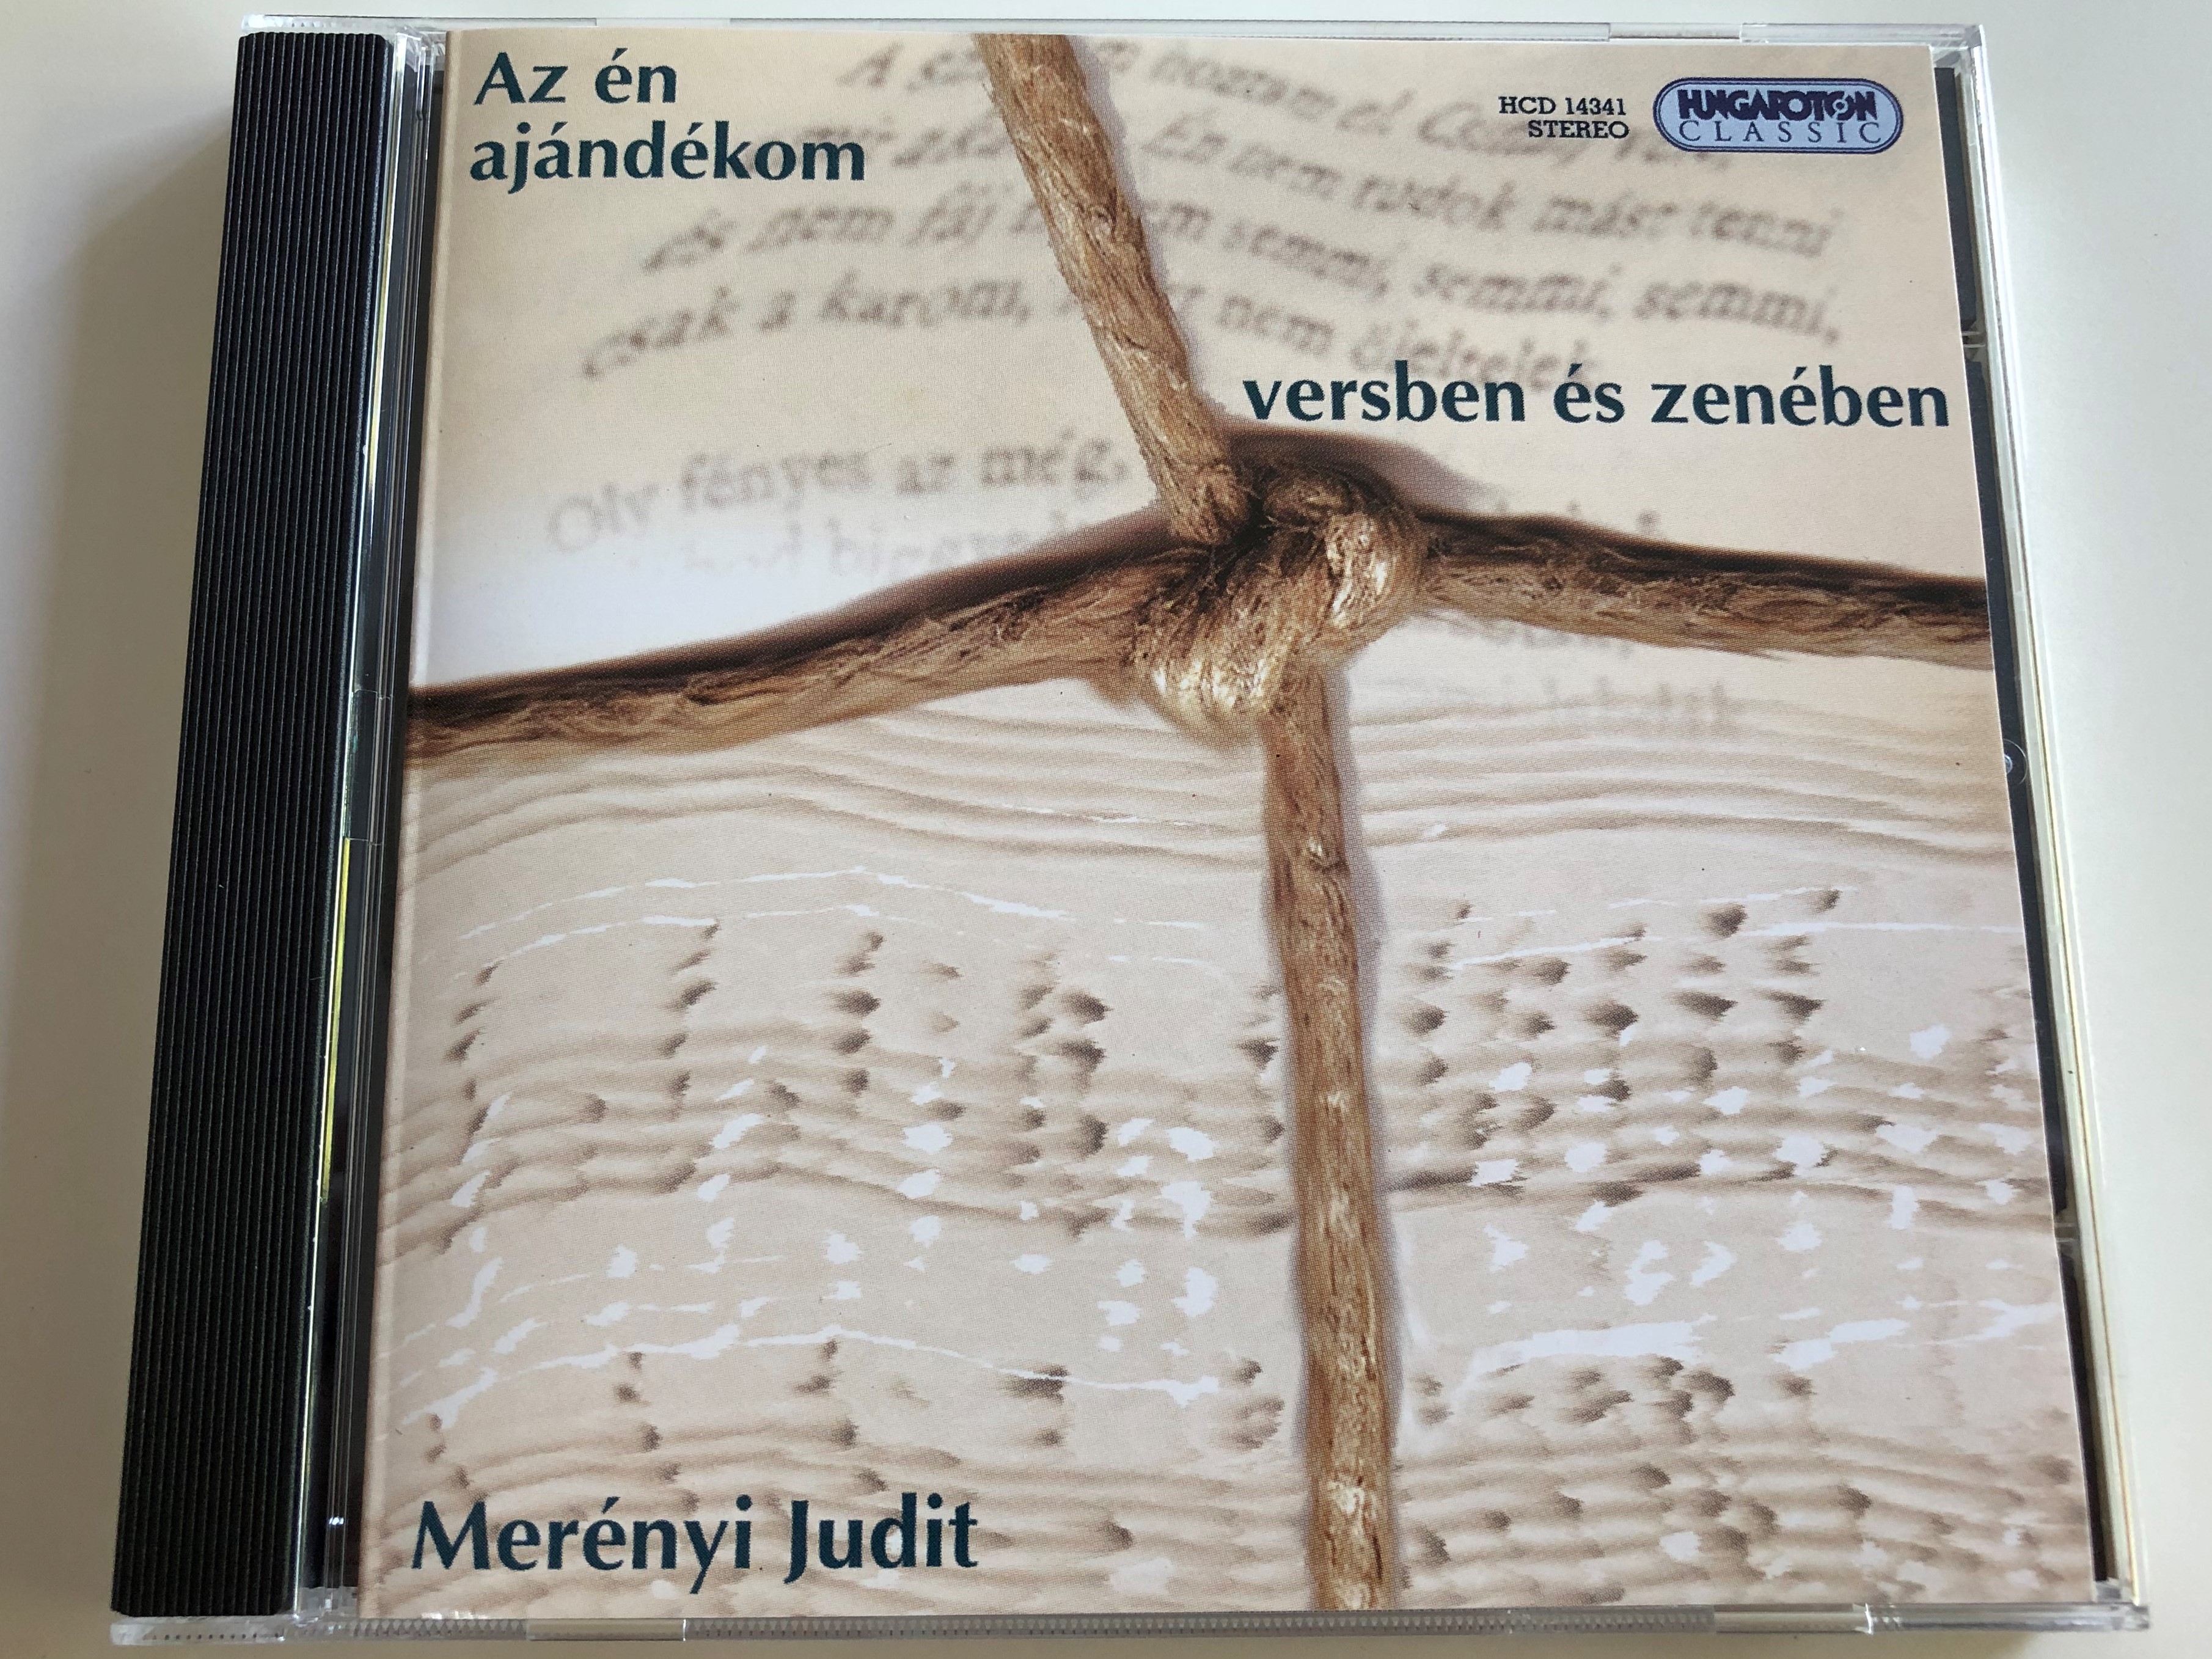 az-n-aj-nd-kom-versben-s-zen-ben-mer-nyi-judit-hungaroton-classic-audio-cd-2007-hcd-14341-1-.jpg